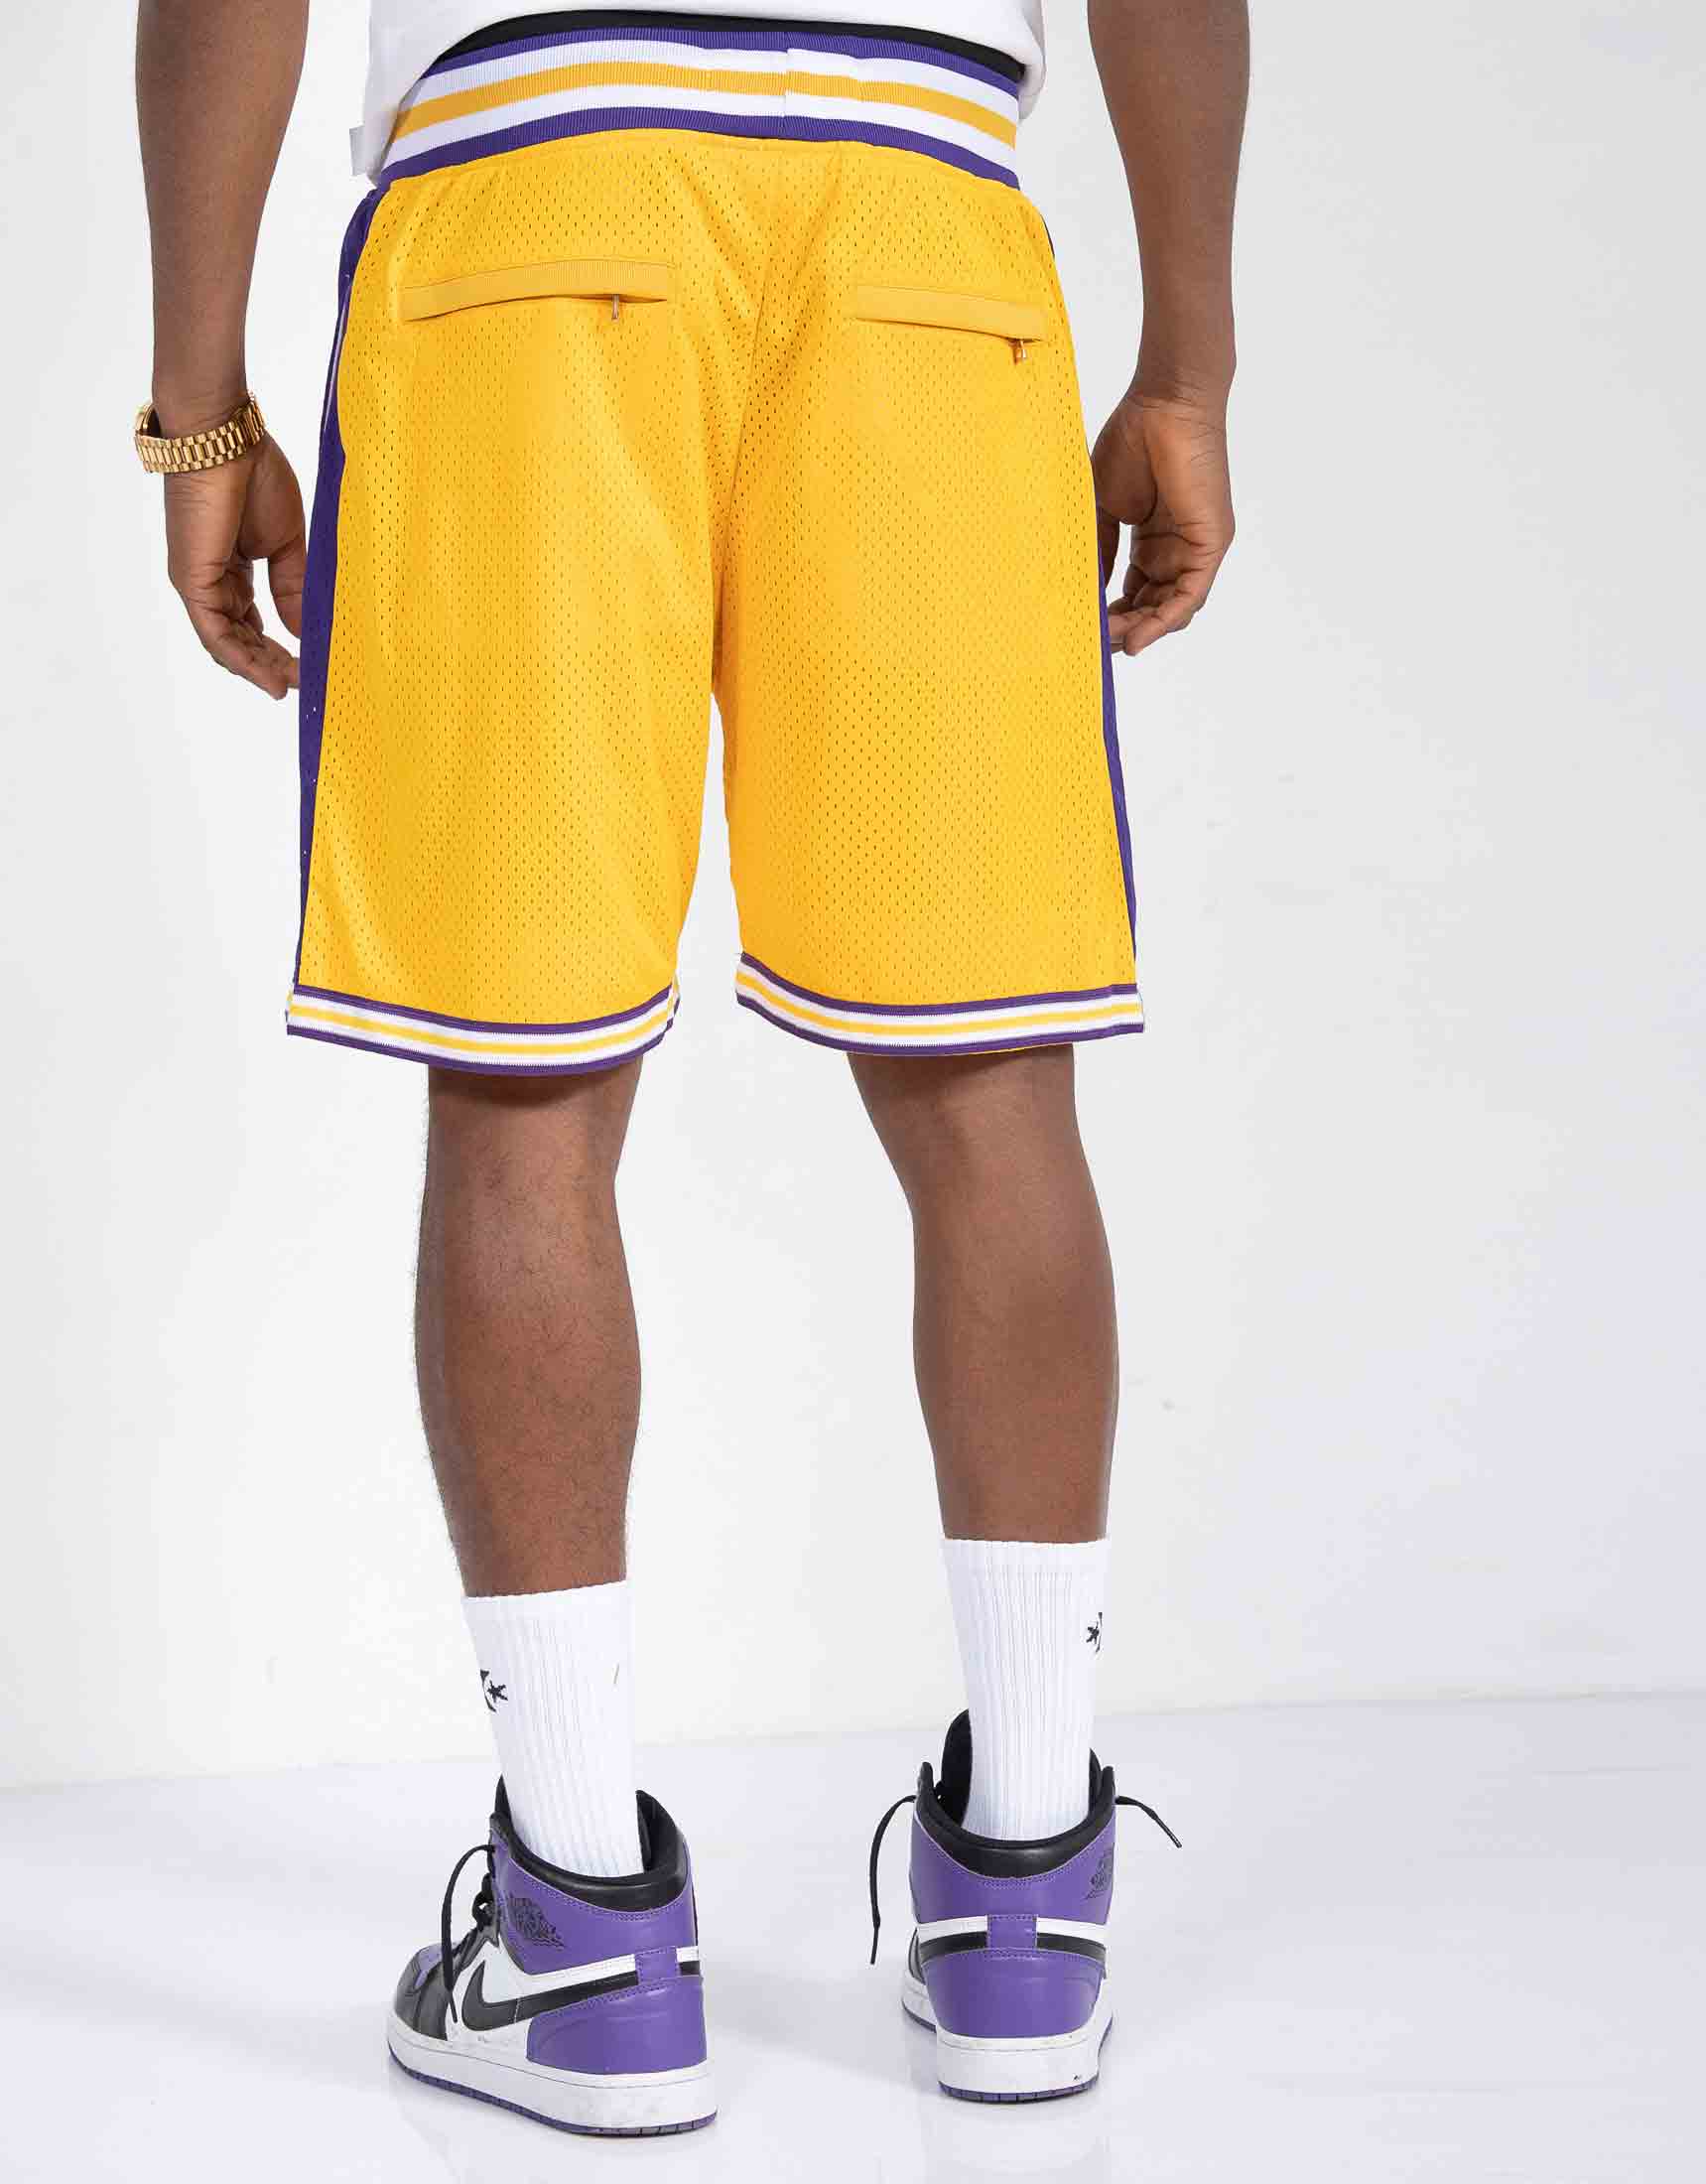 Kobe Bryant #33 Lower Merion Triple Color Basketball Shorts